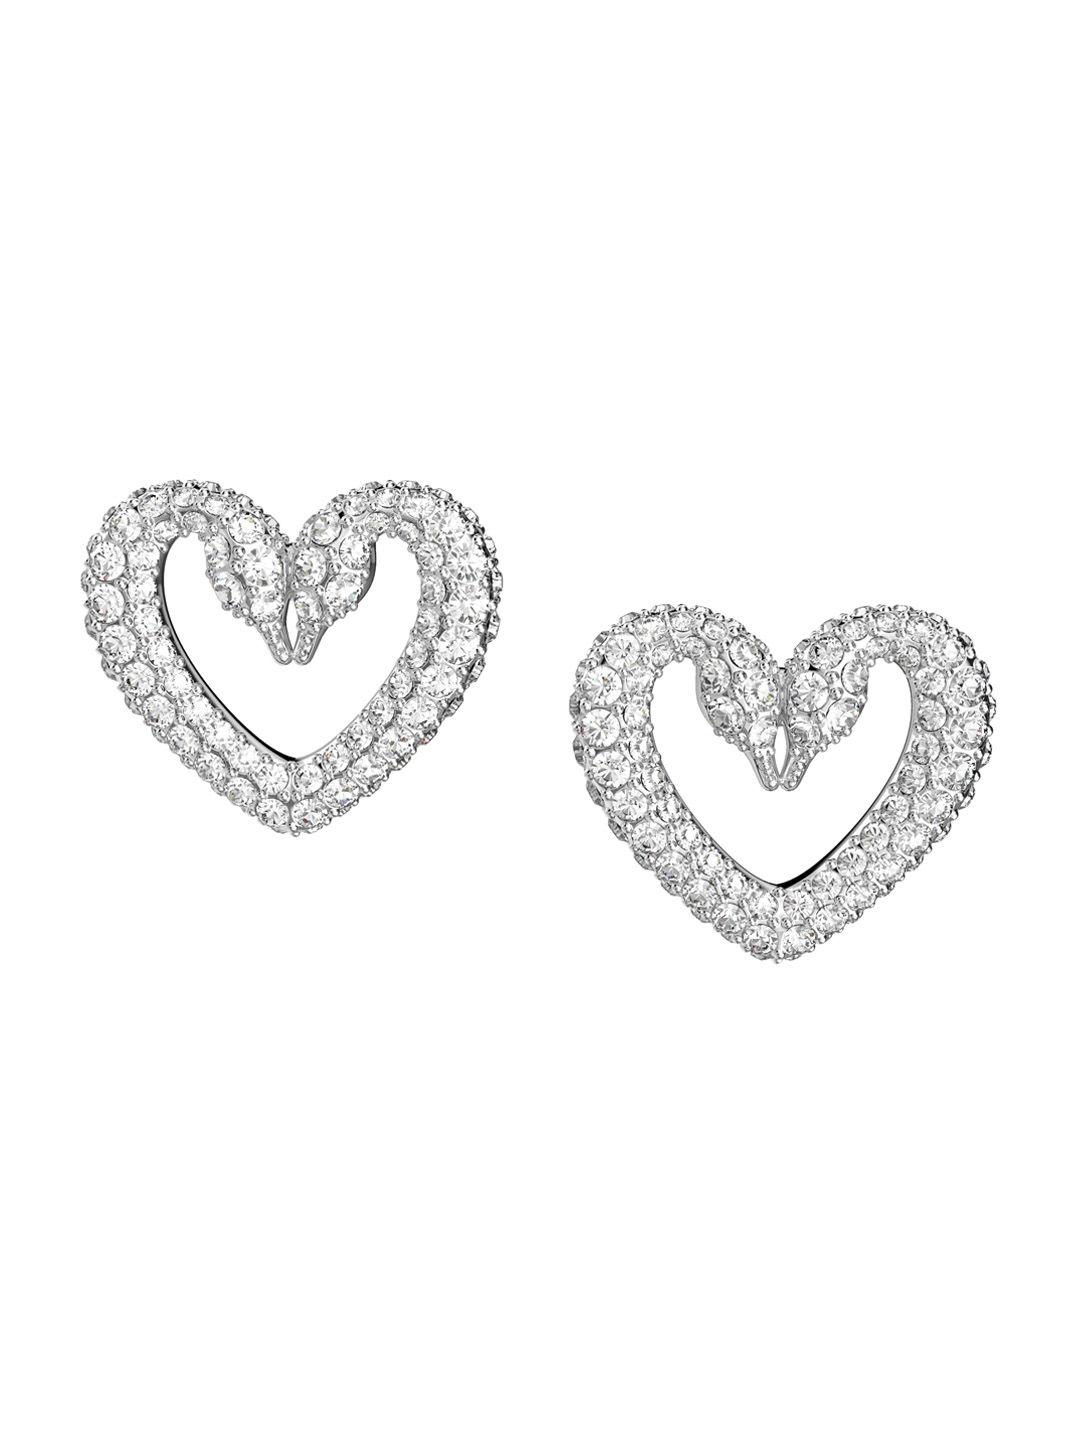 swarovski white & silver-toned heart shaped studs earrings